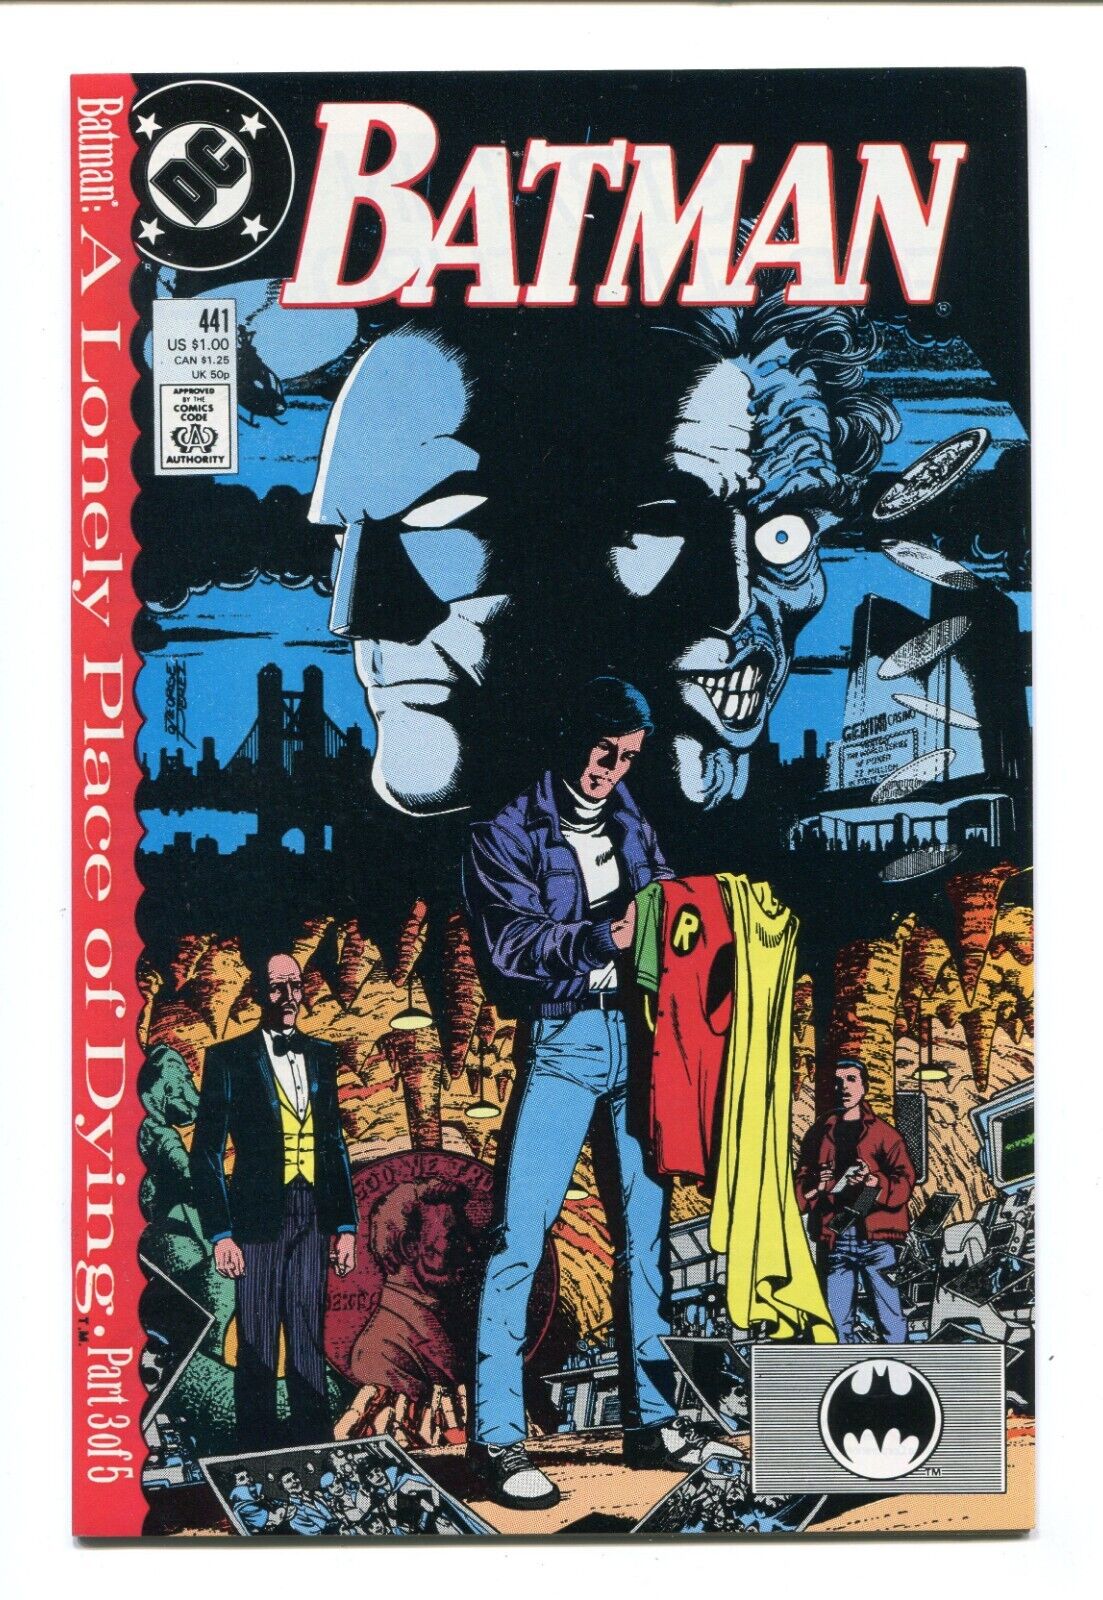 BATMAN #441 - TIM DRAKE - DICK GRAYSON NIGHTWING - UNREAD NM+ COPY - 1989